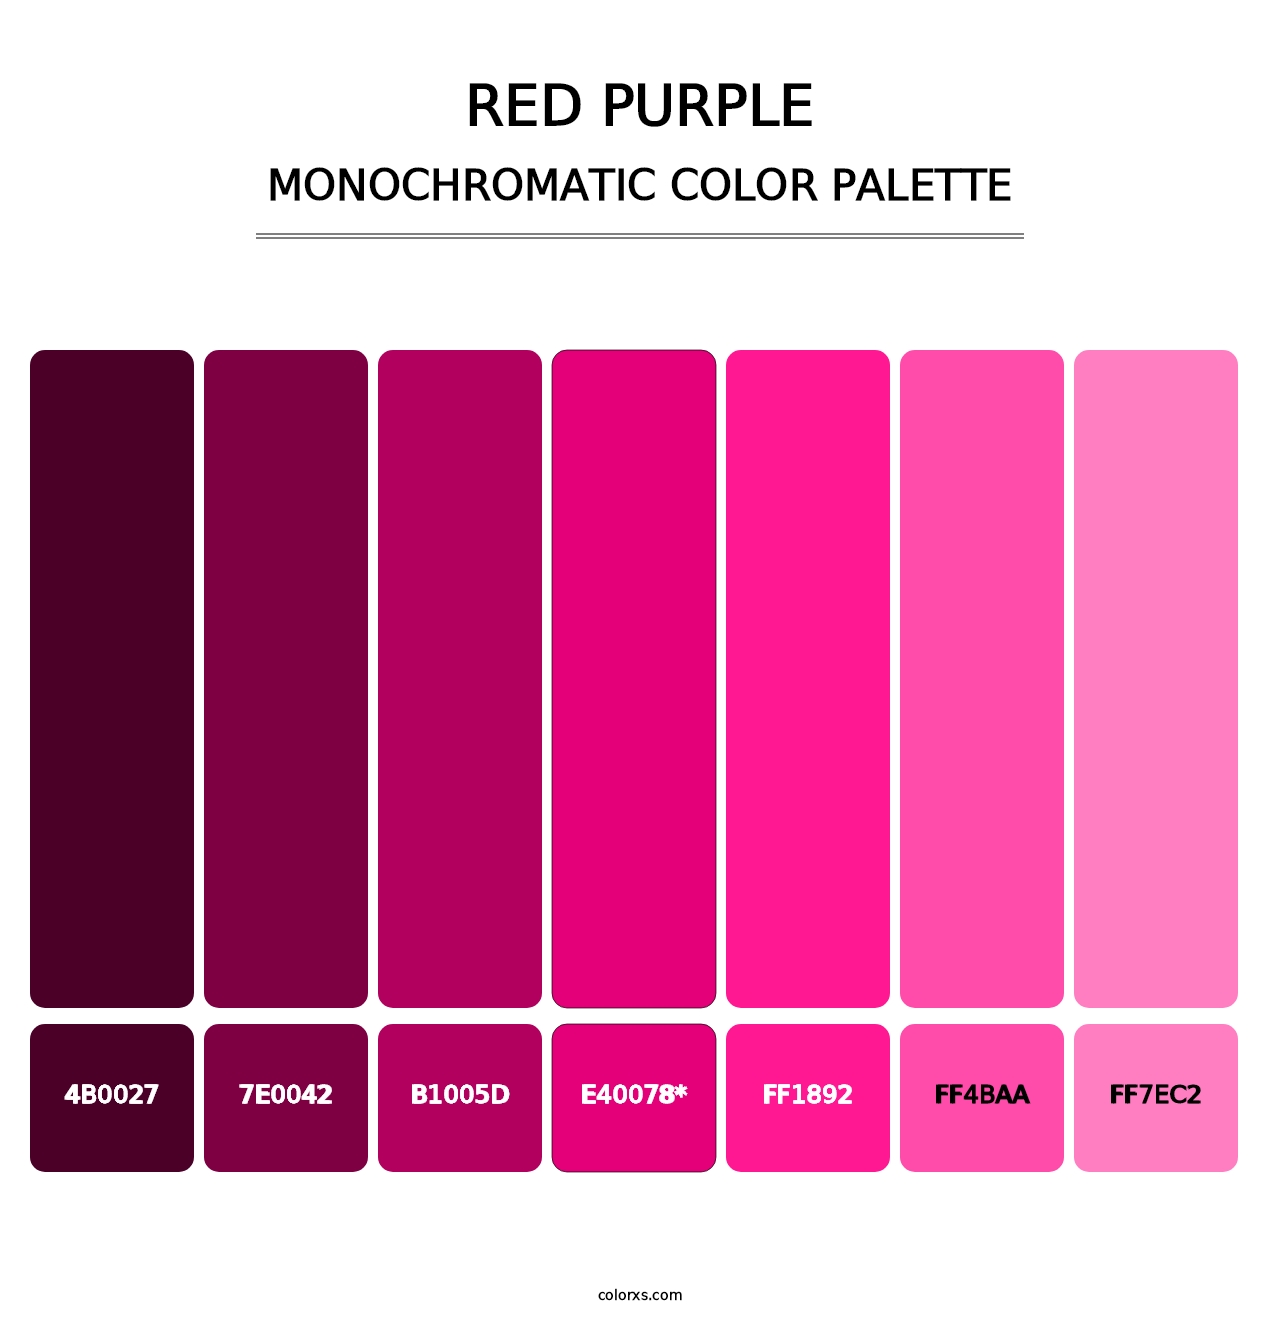 Red Purple - Monochromatic Color Palette